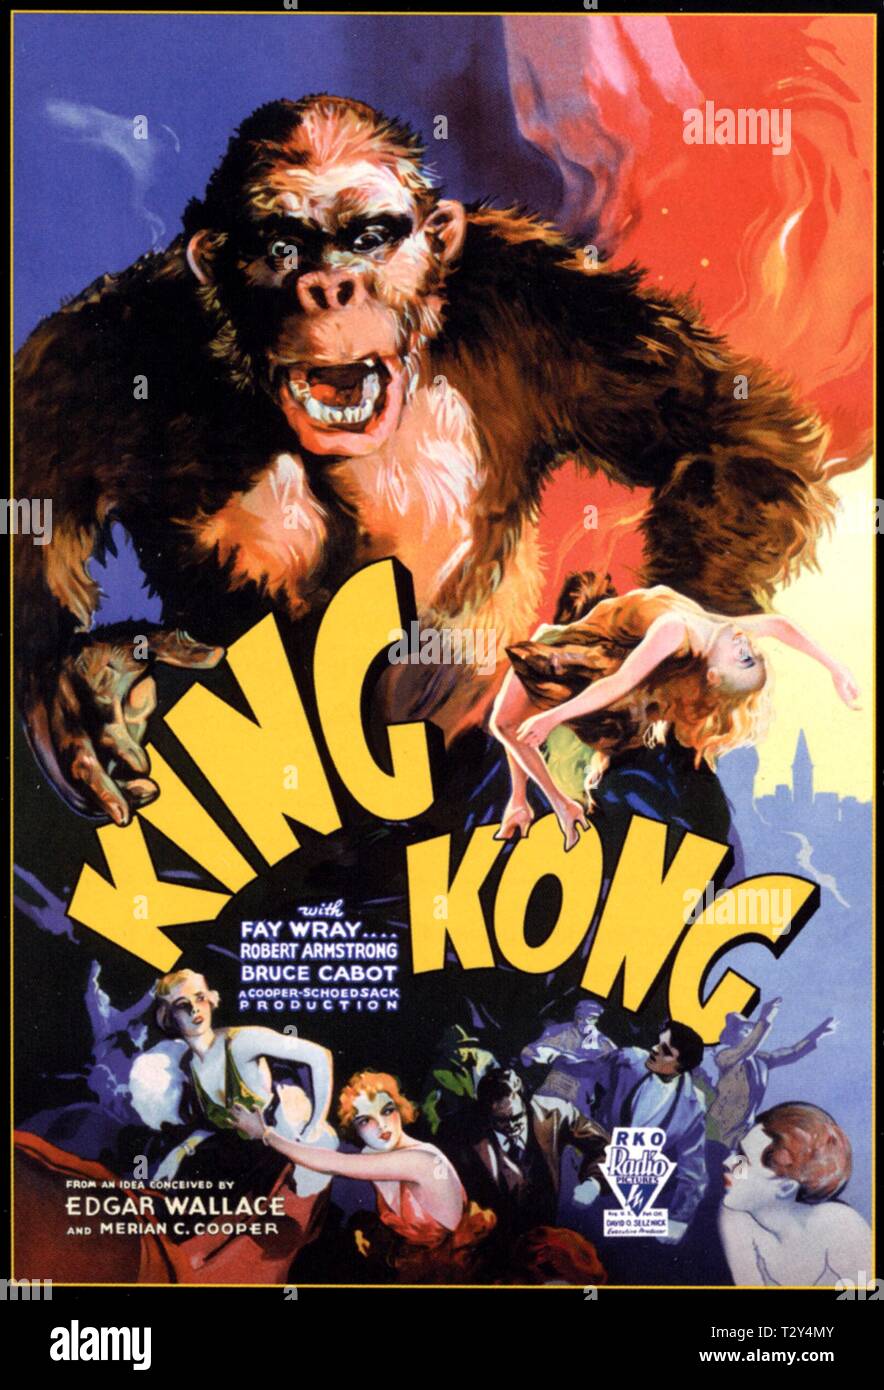 FILM POSTER, KING KONG, 1933 Stock Photo